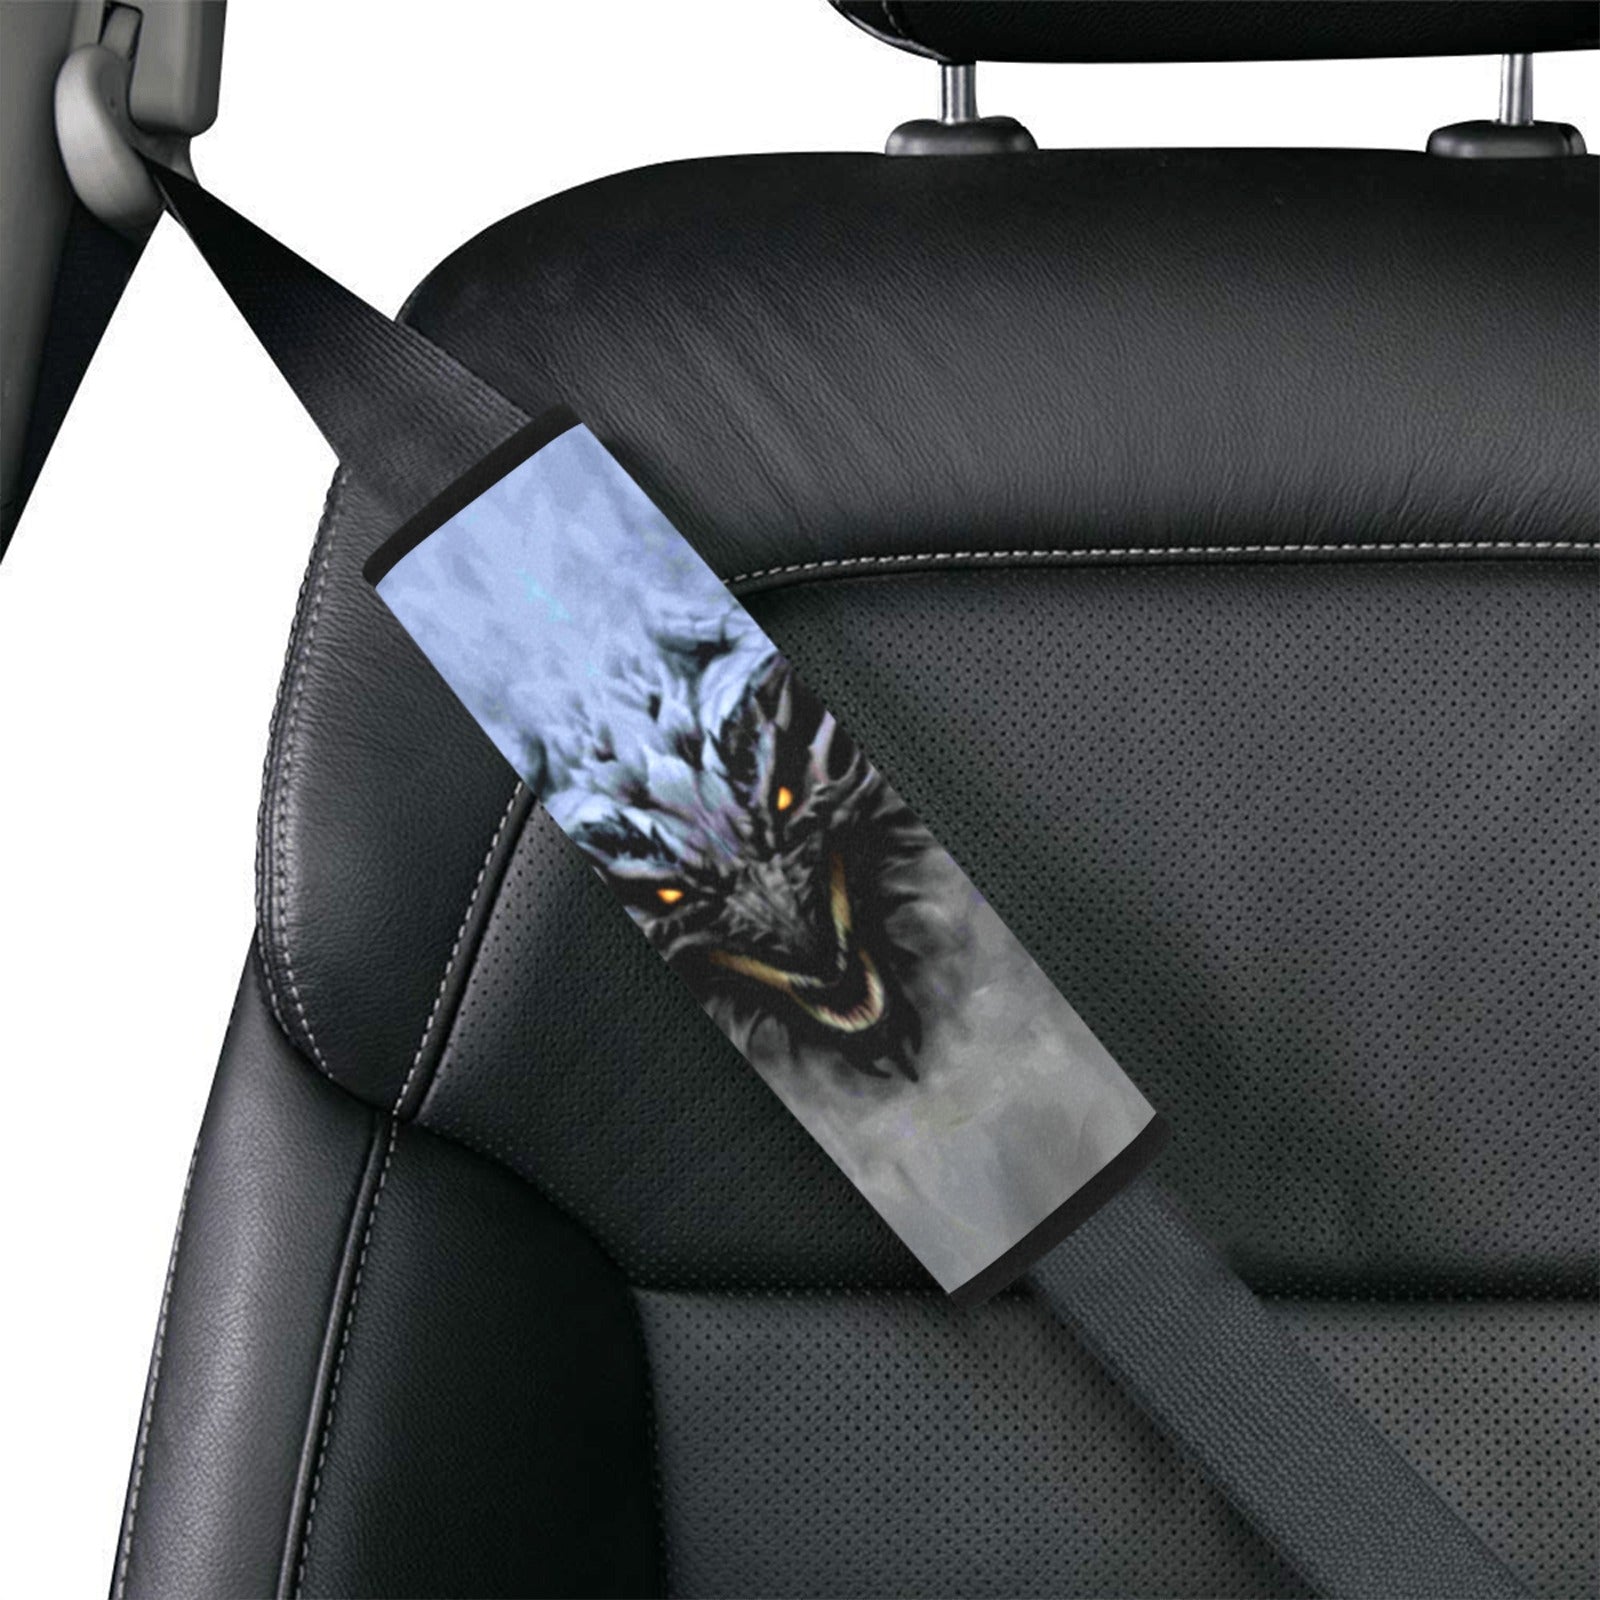 Shadow Dragon Seat Belt Cover 7" x 10"